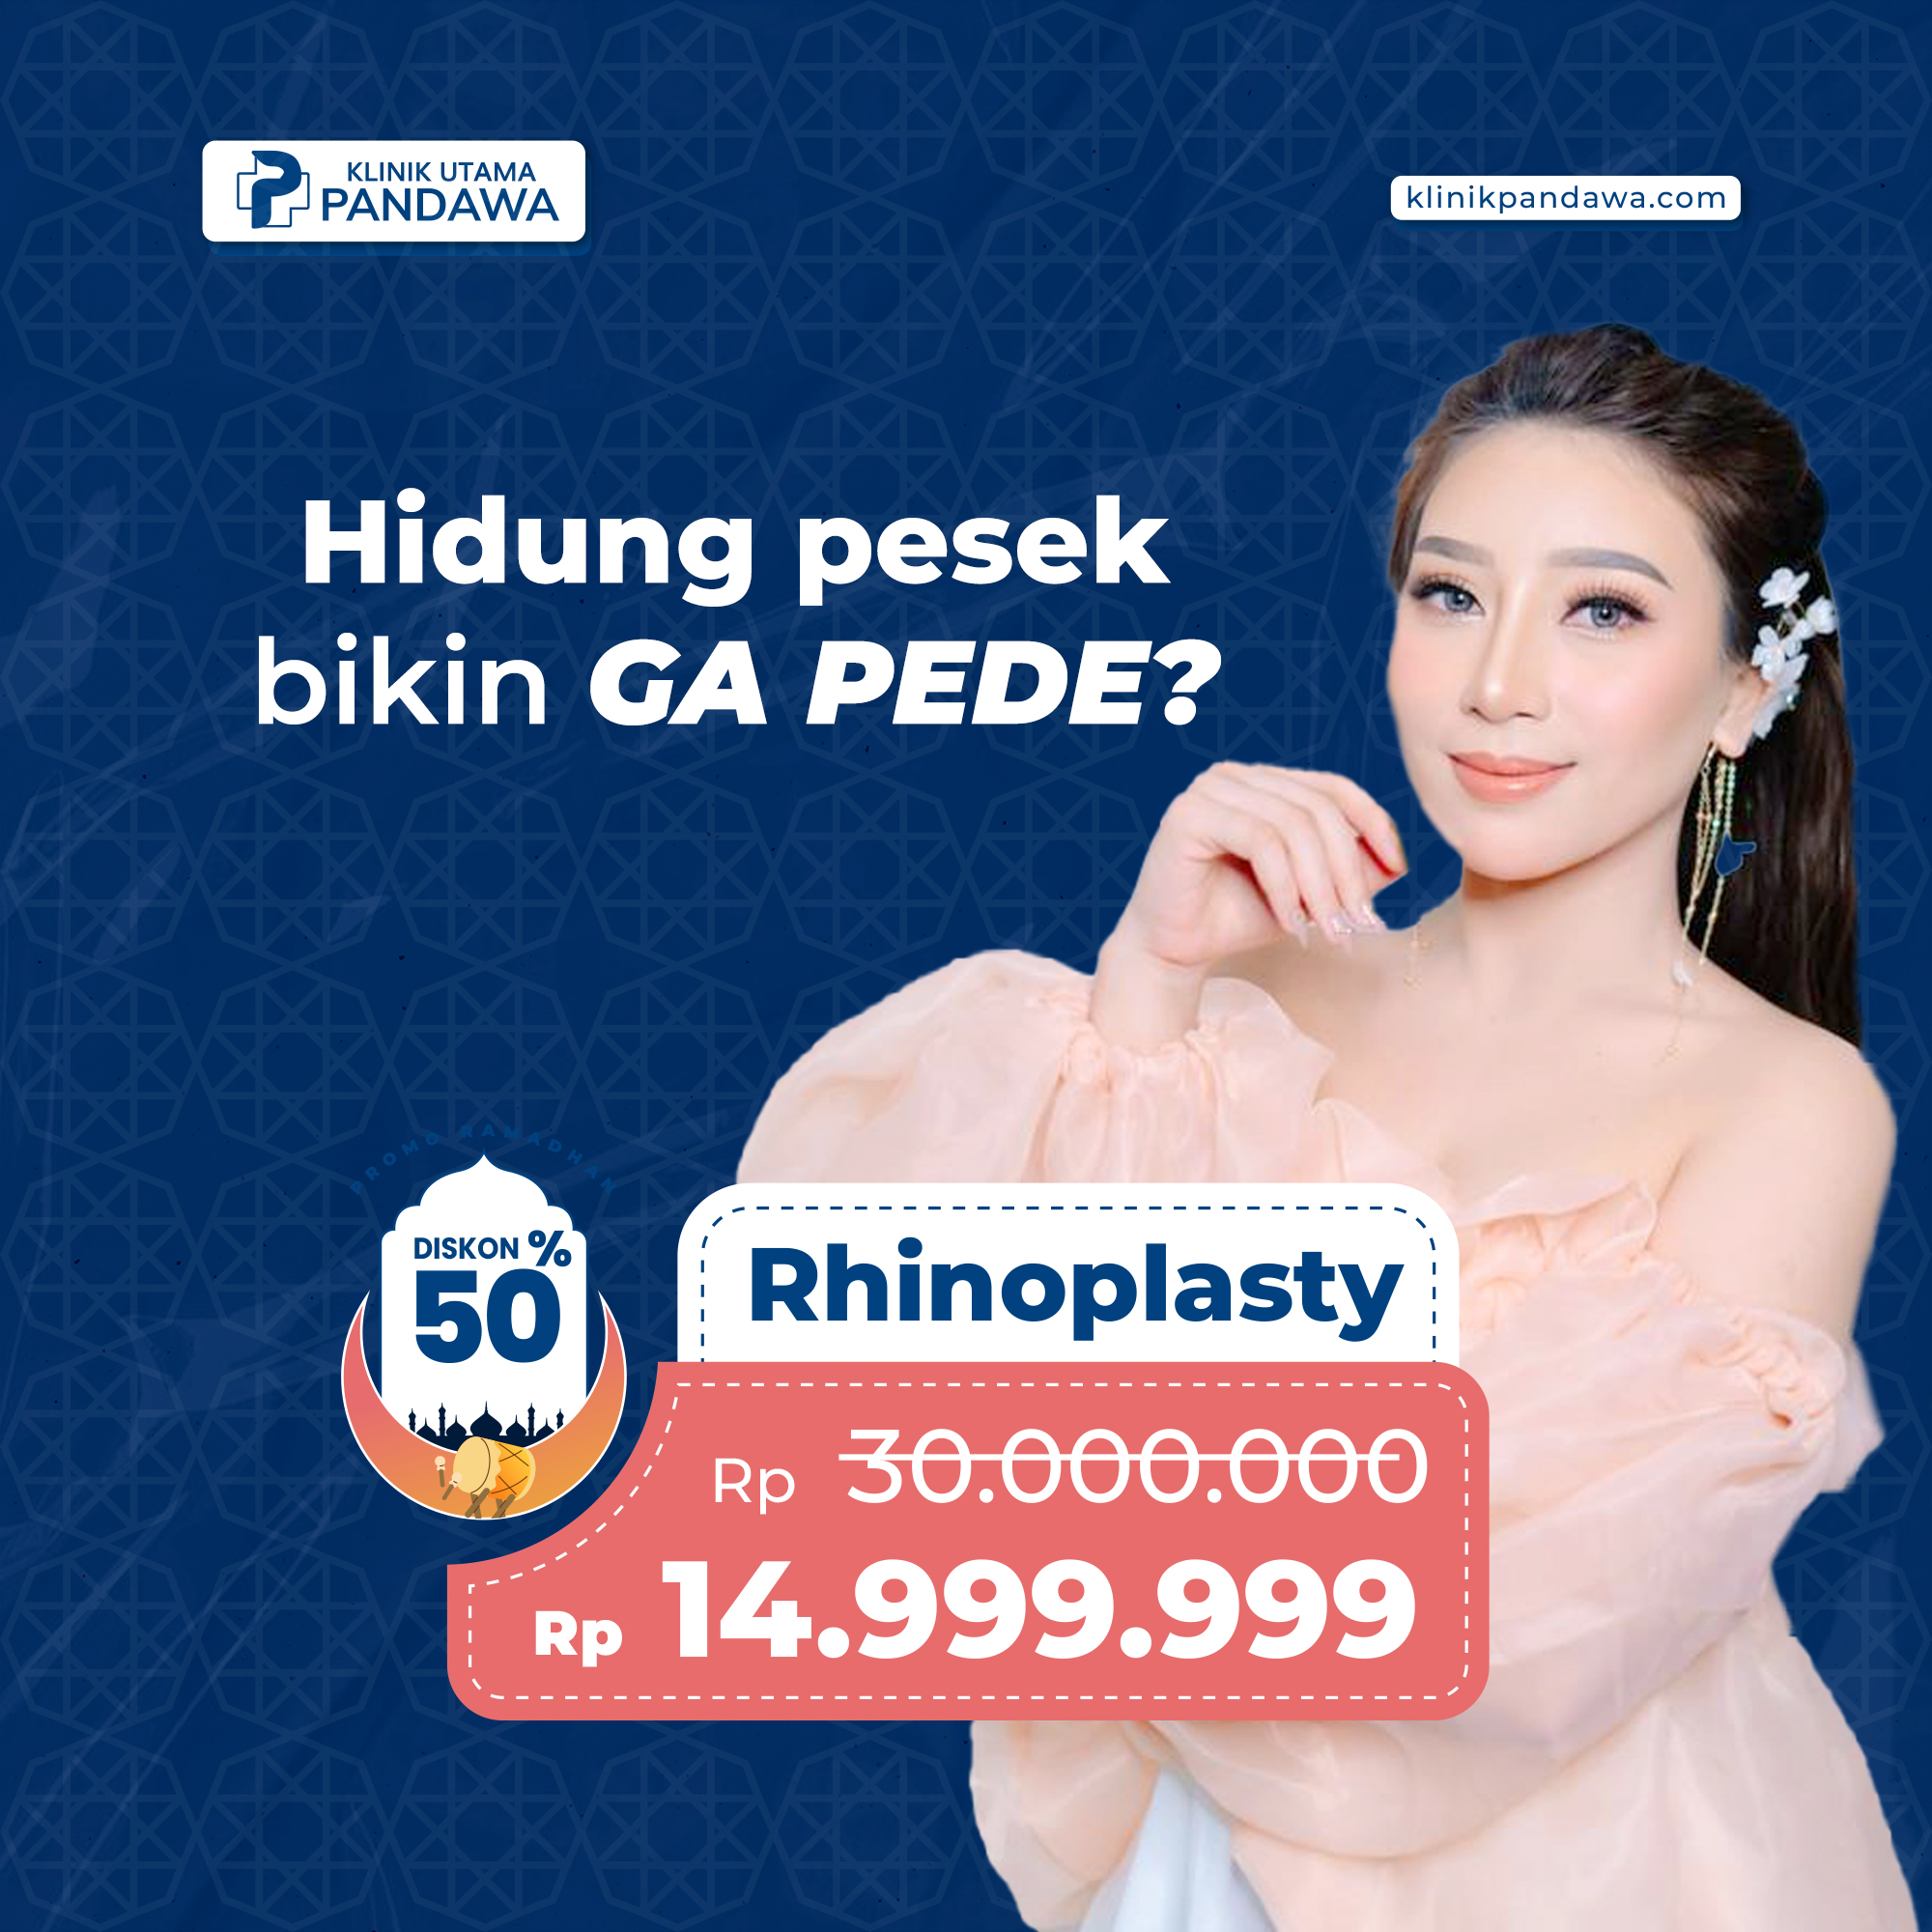 Promo Treatment Rhinoplasty di Klinik Utama Pandawa